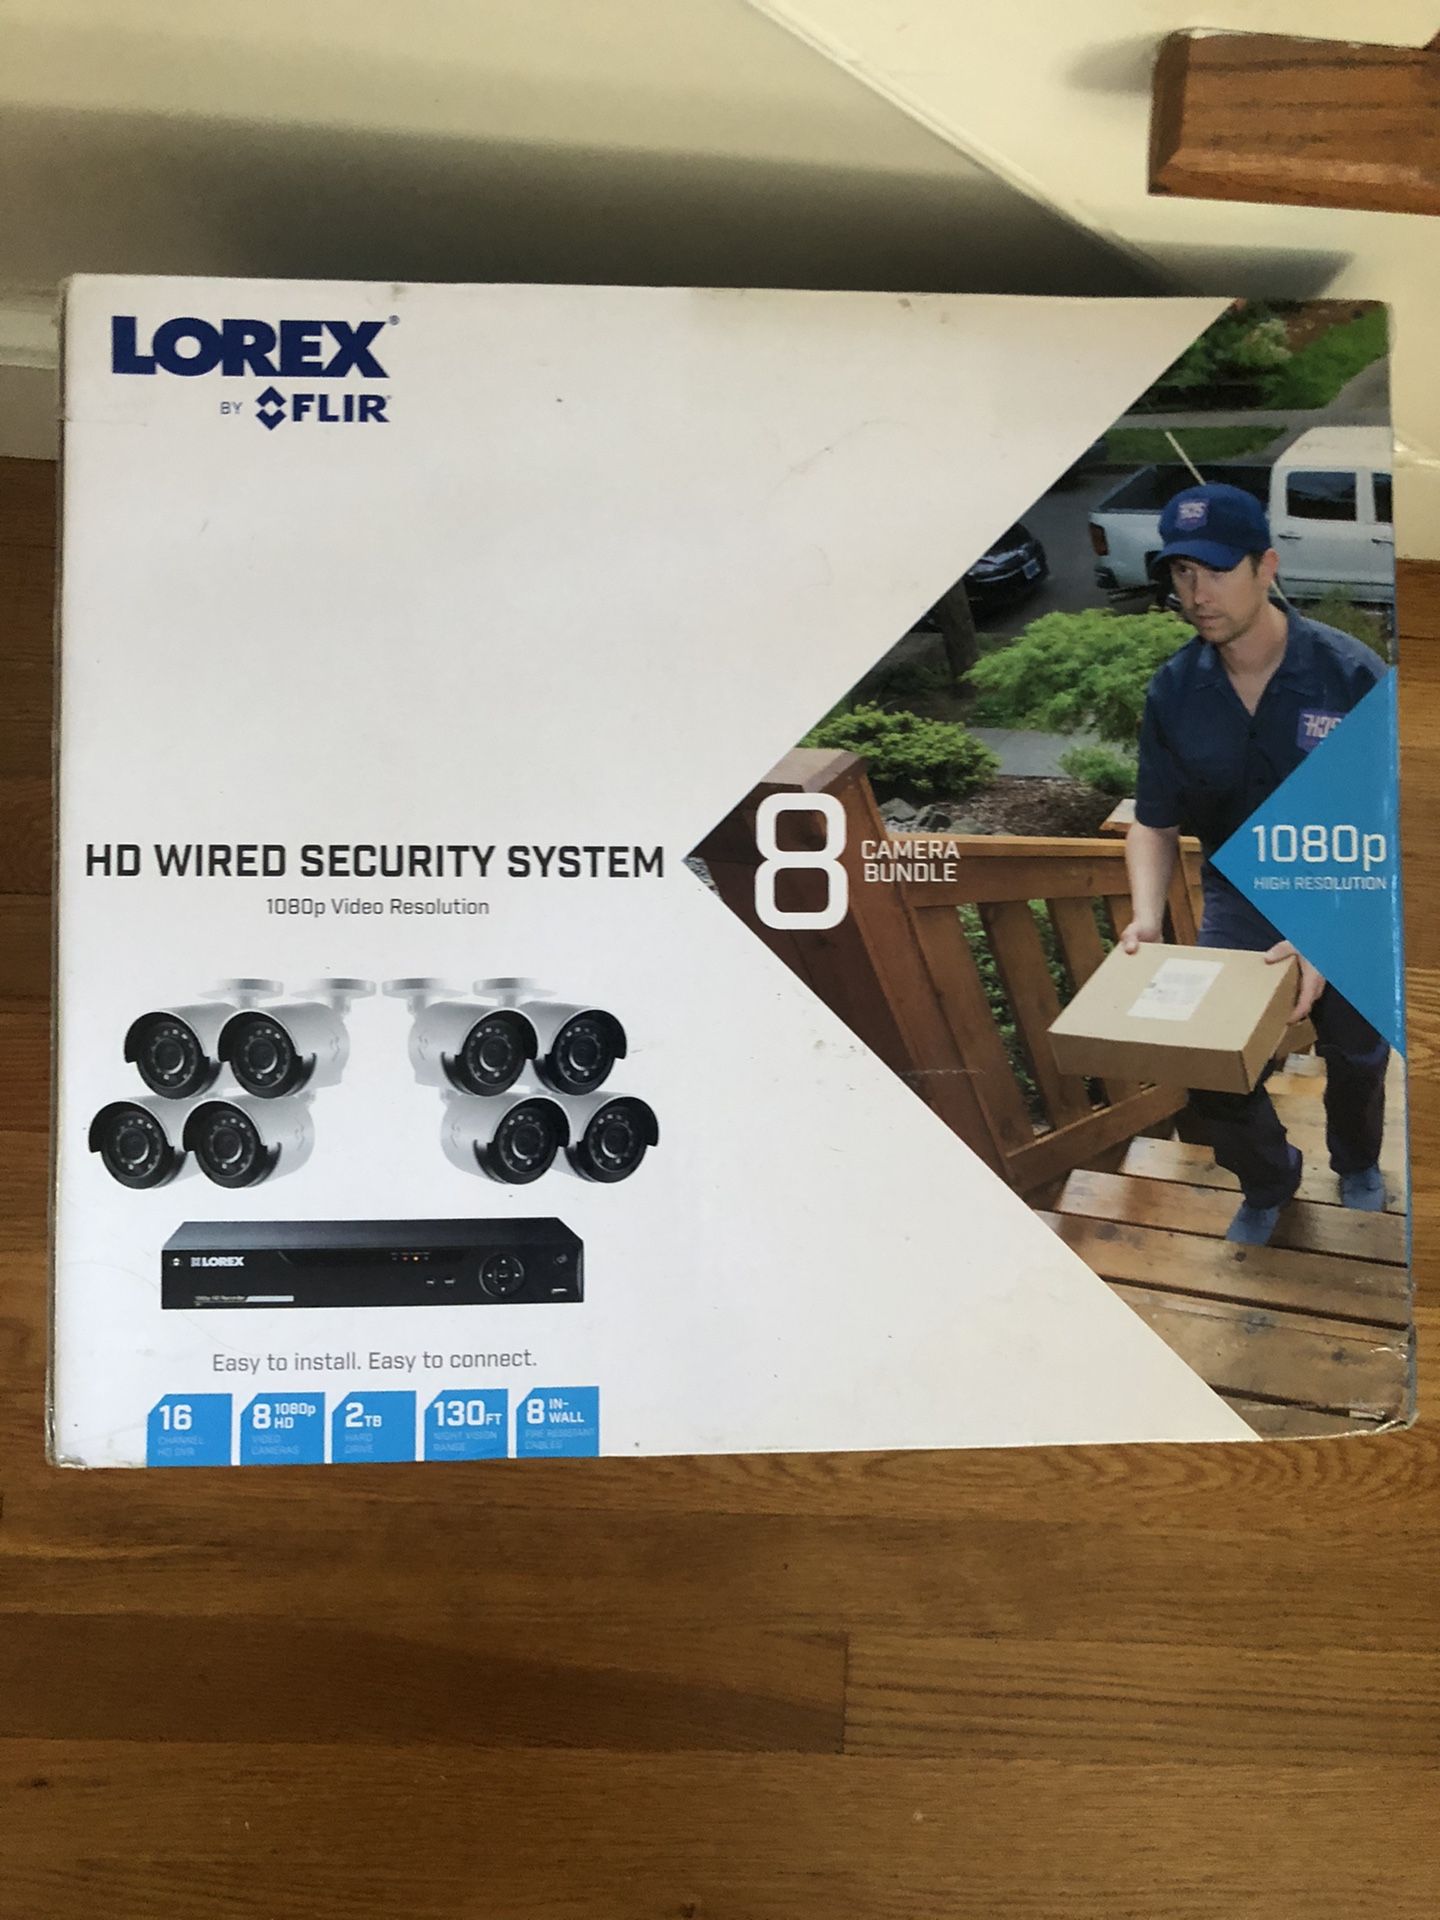 Lorex security cameras